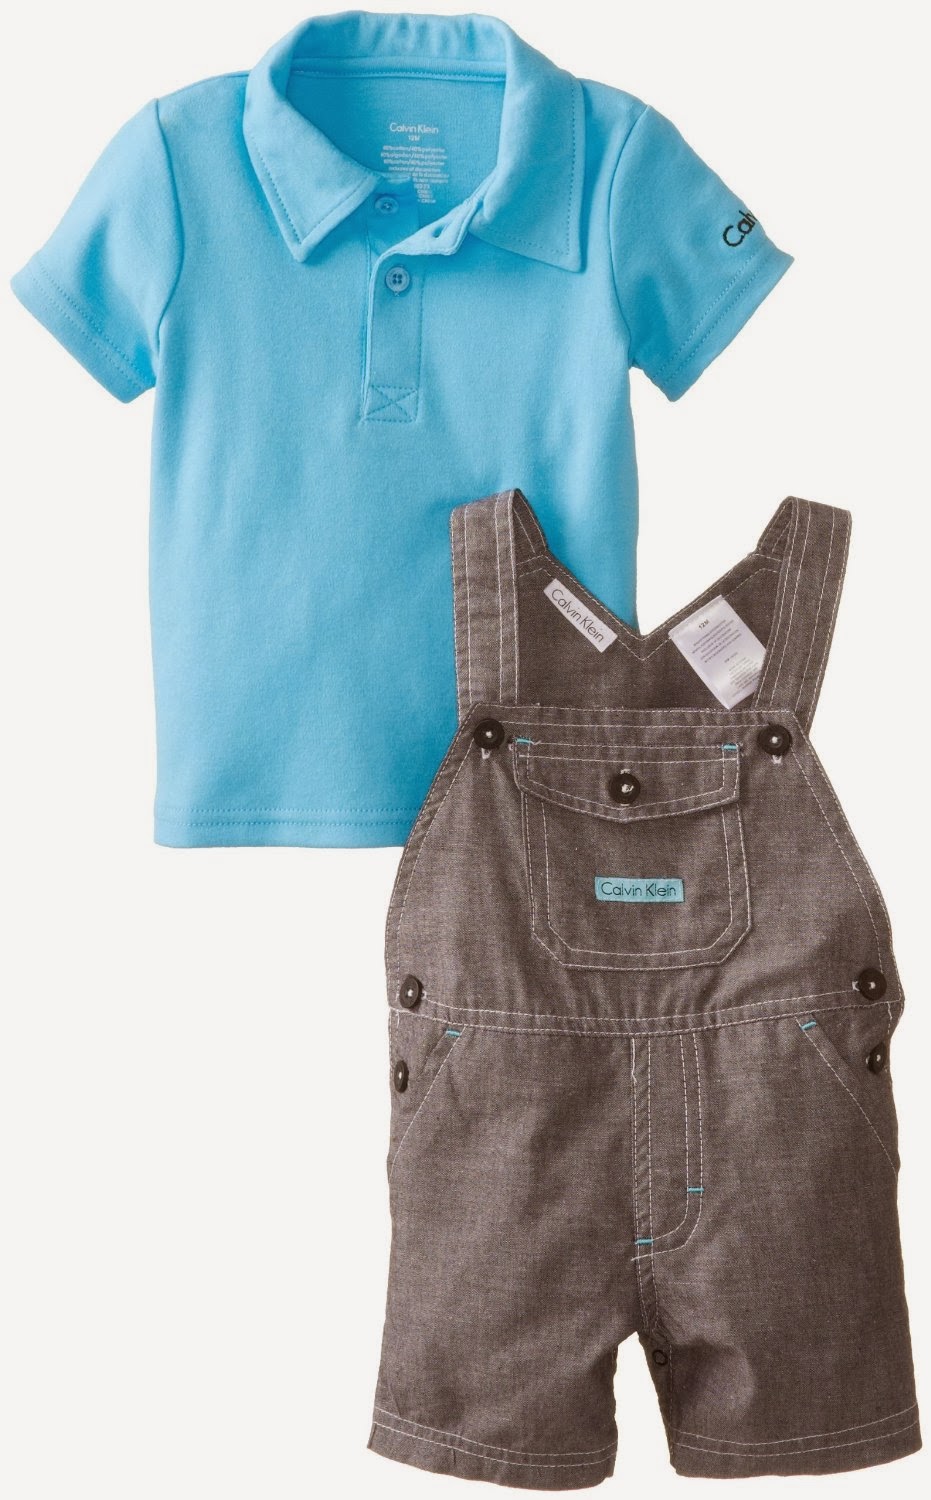 Rays Little Baju Bayi Bermerek Calvin Klein Untuk Bayi 